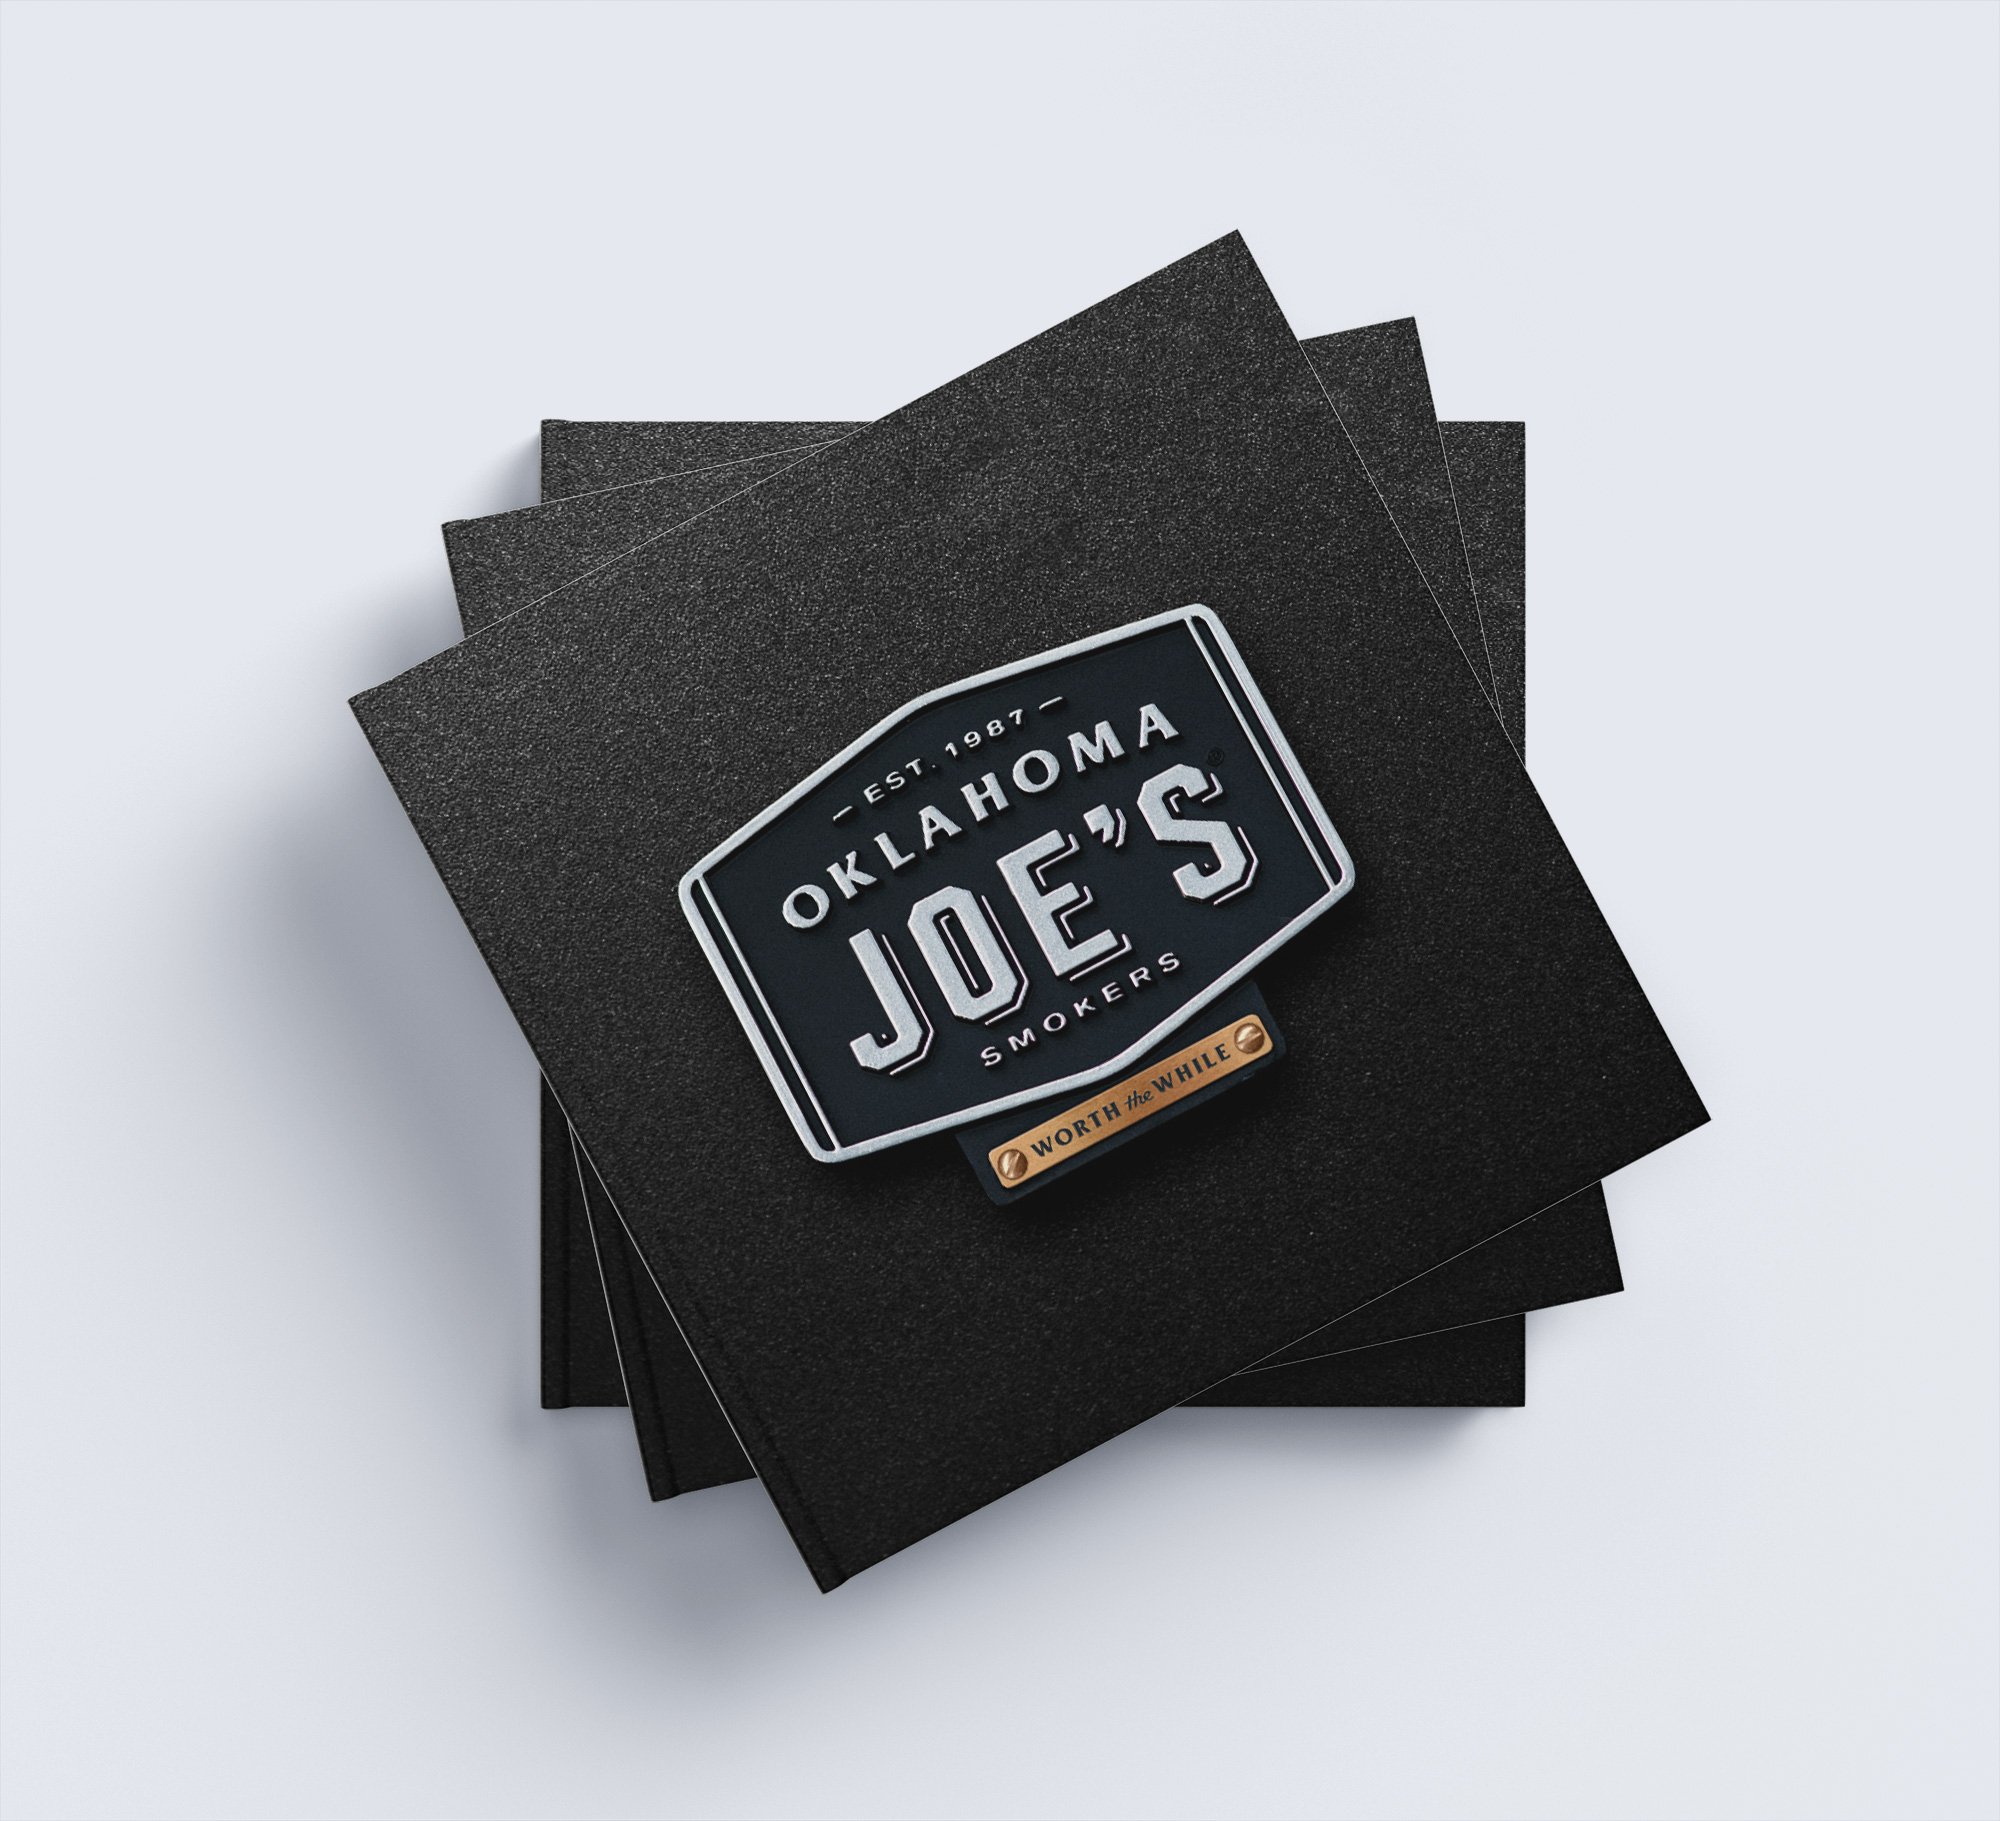 Oklahoma-Joes-Smokers-Book1.jpg